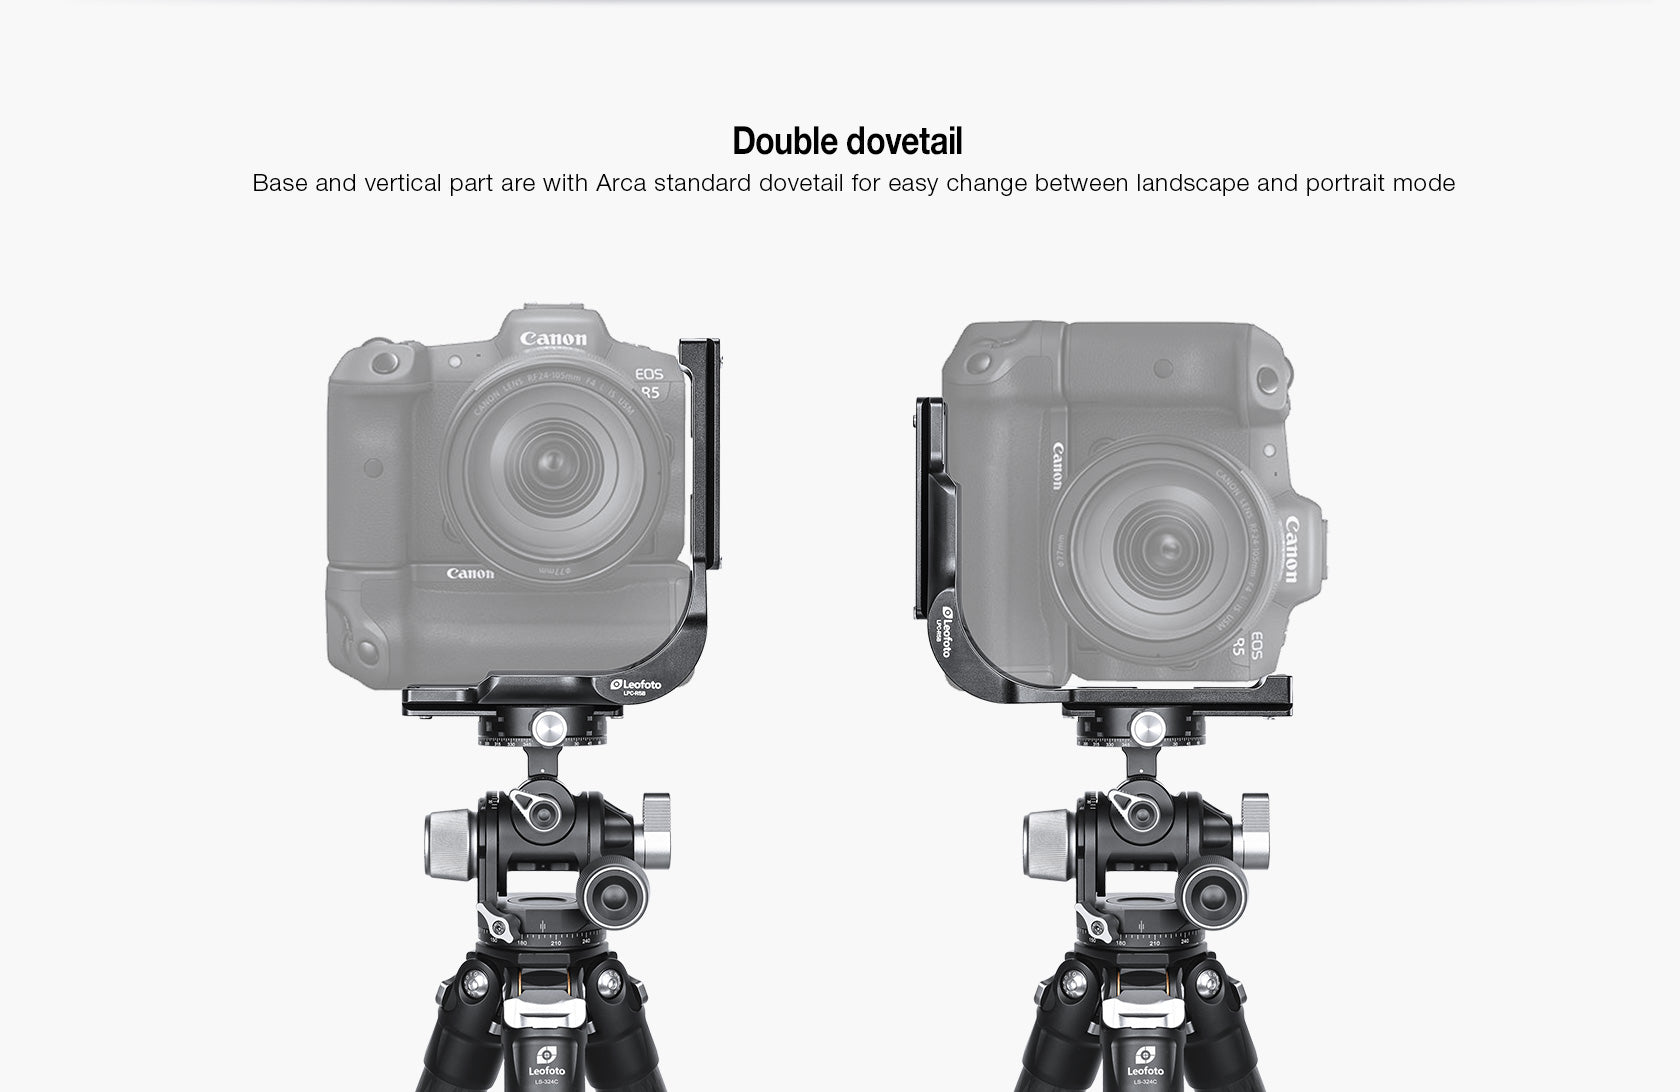 "Open Box" Leofoto LPC-R5B L Plate for Canon EOS R5/R6 Camera w/ Battery Grip | Arca Compatible QD Socket